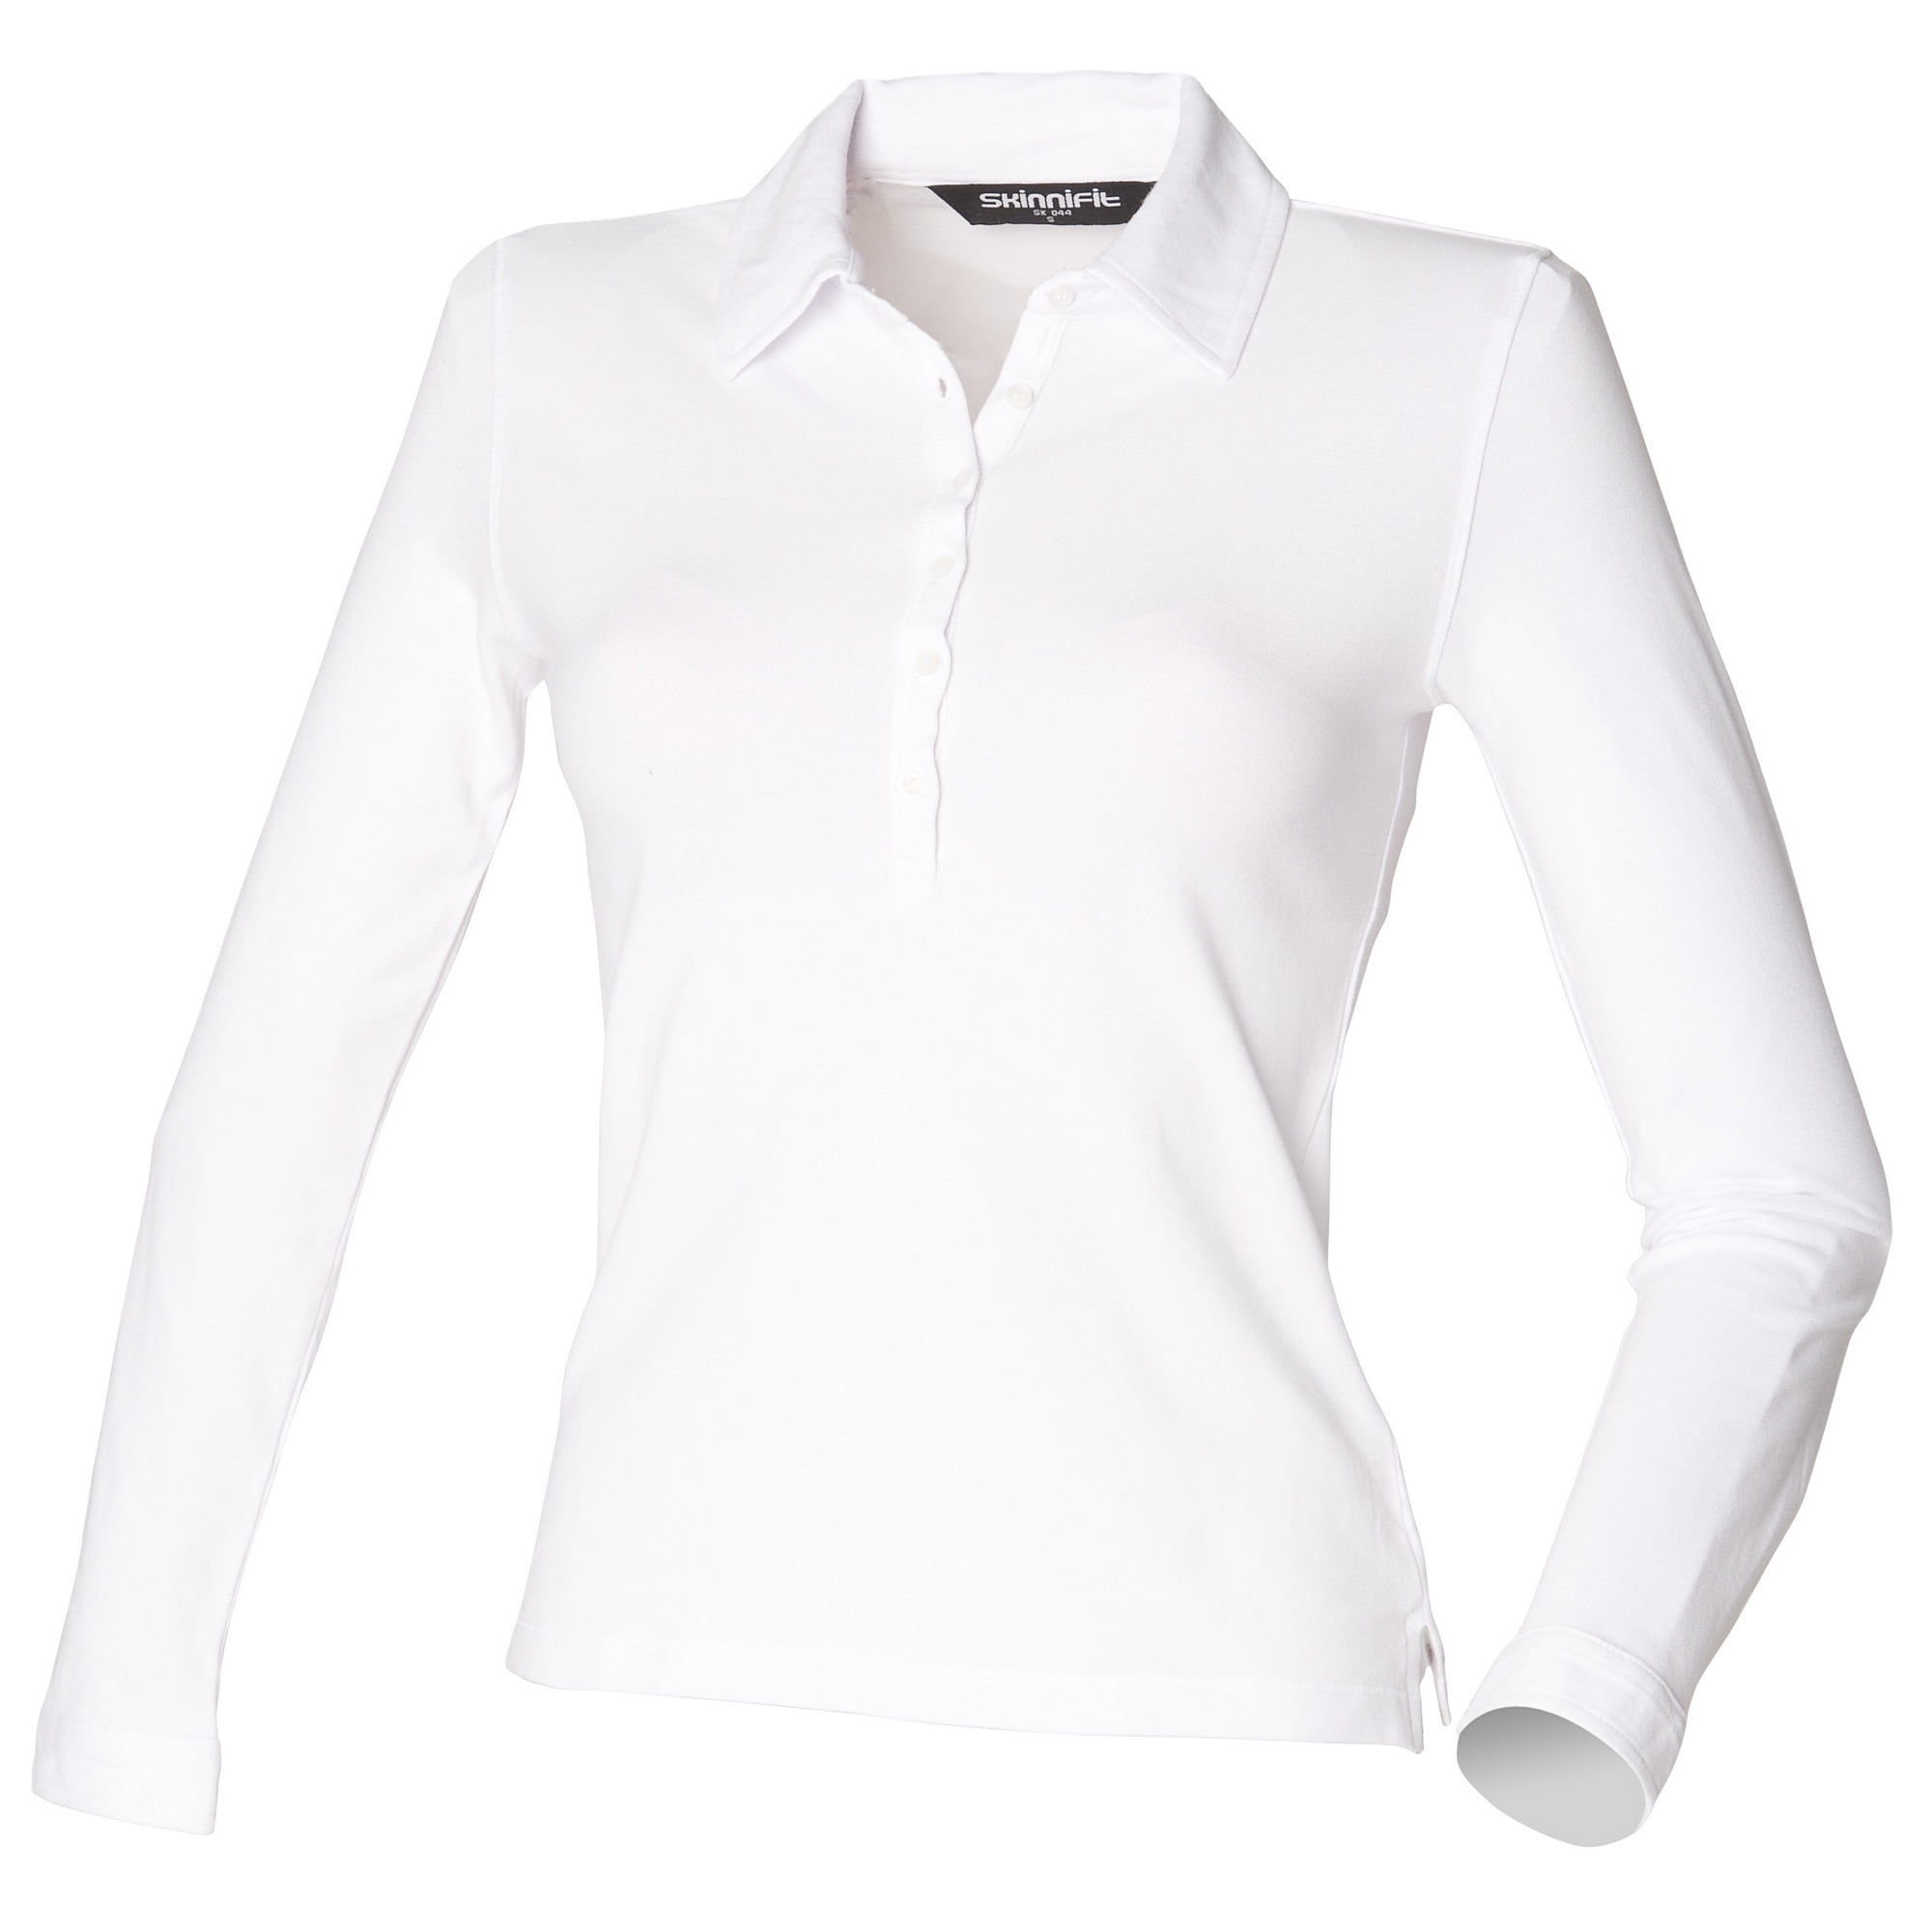 white polo shirt long sleeve women's